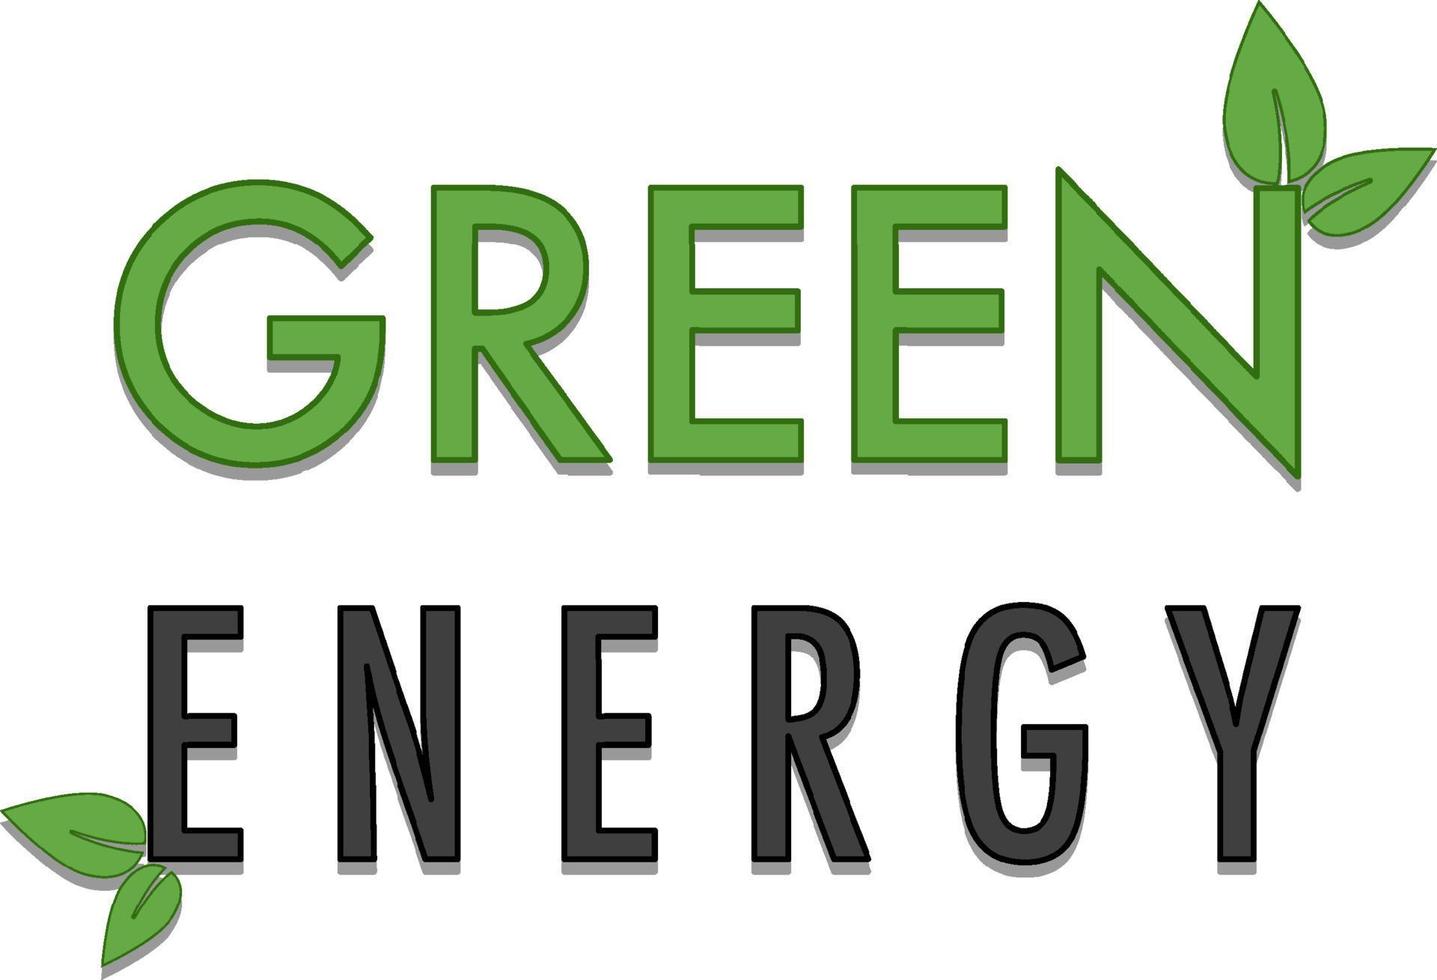 A green energy sign banner vector